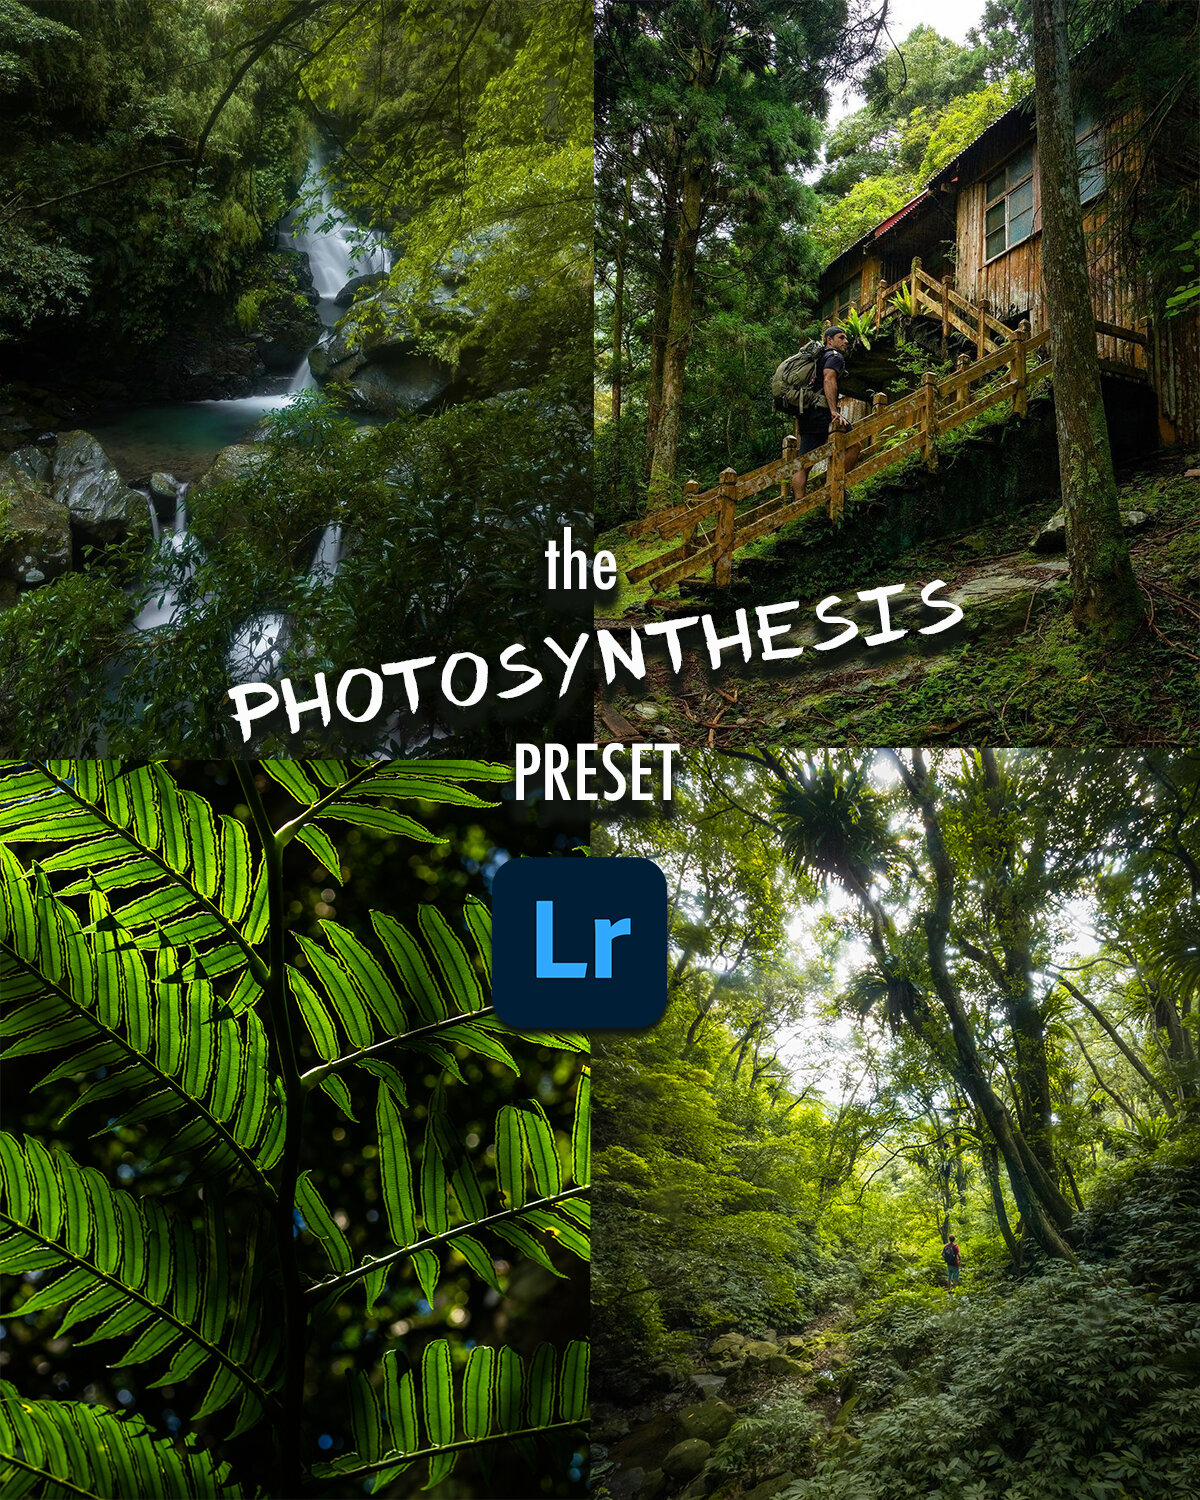 photosynthesis preset.jpg